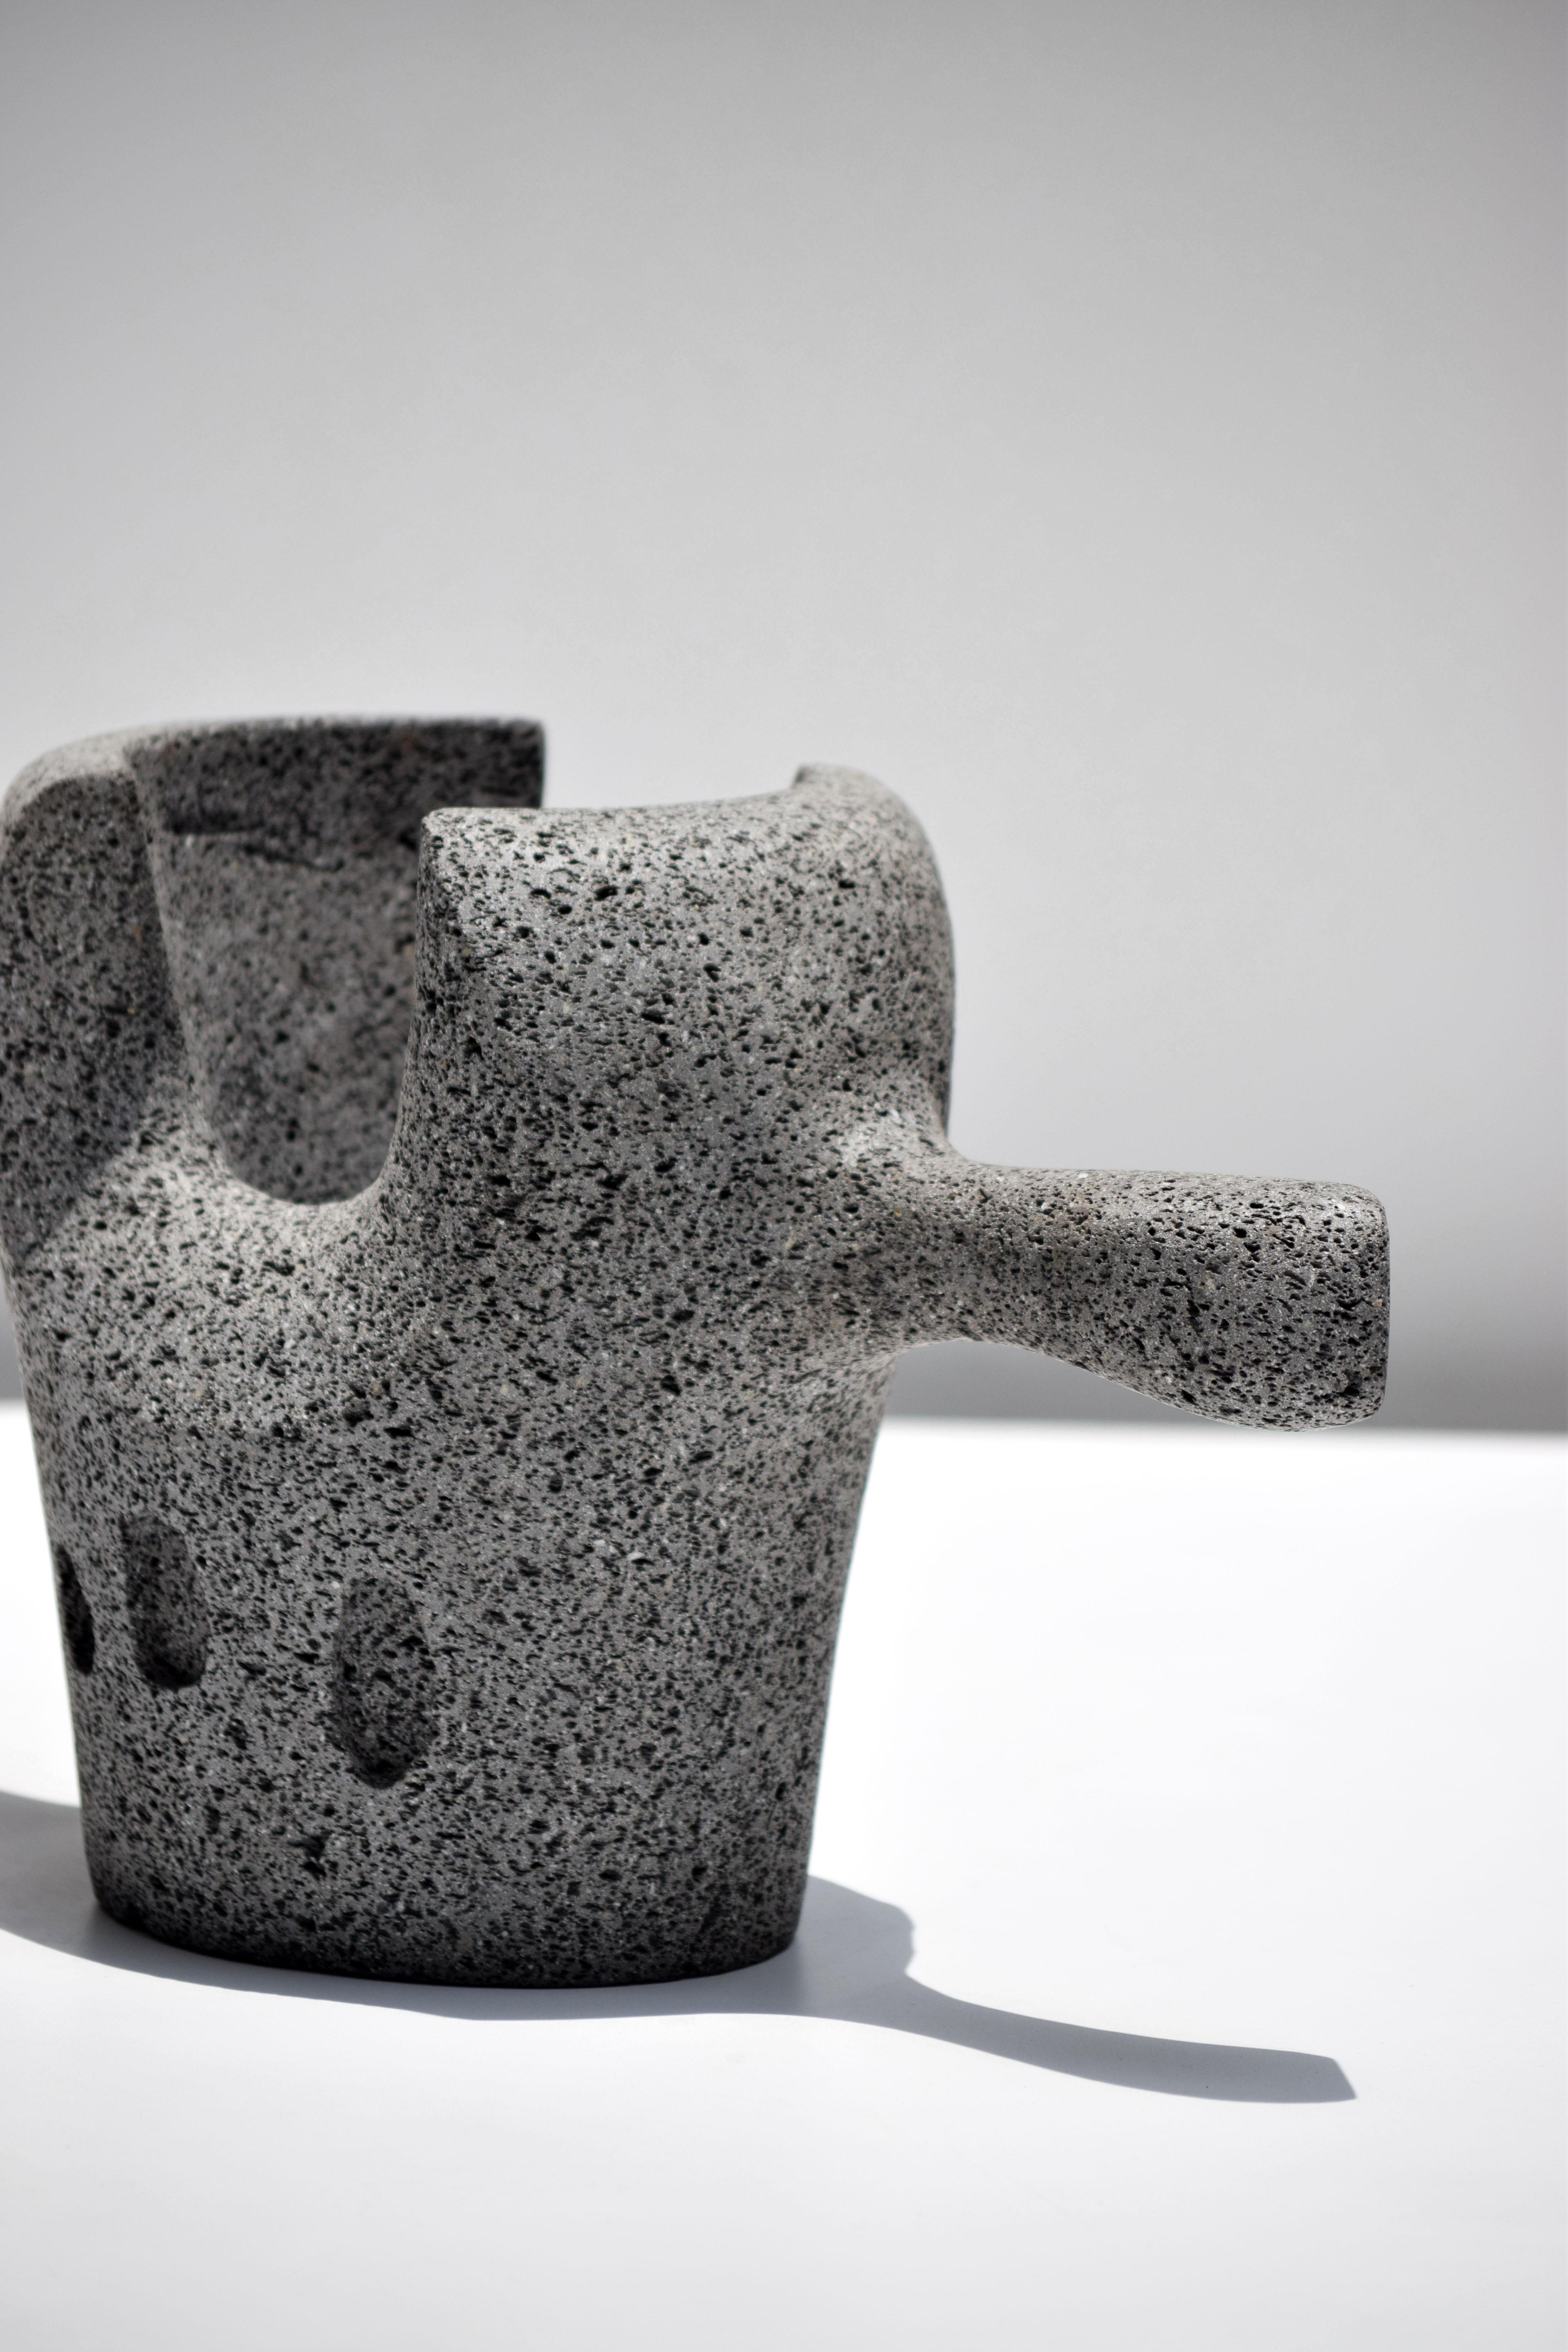 Mexican Sculptural Pot by La Jo Gli